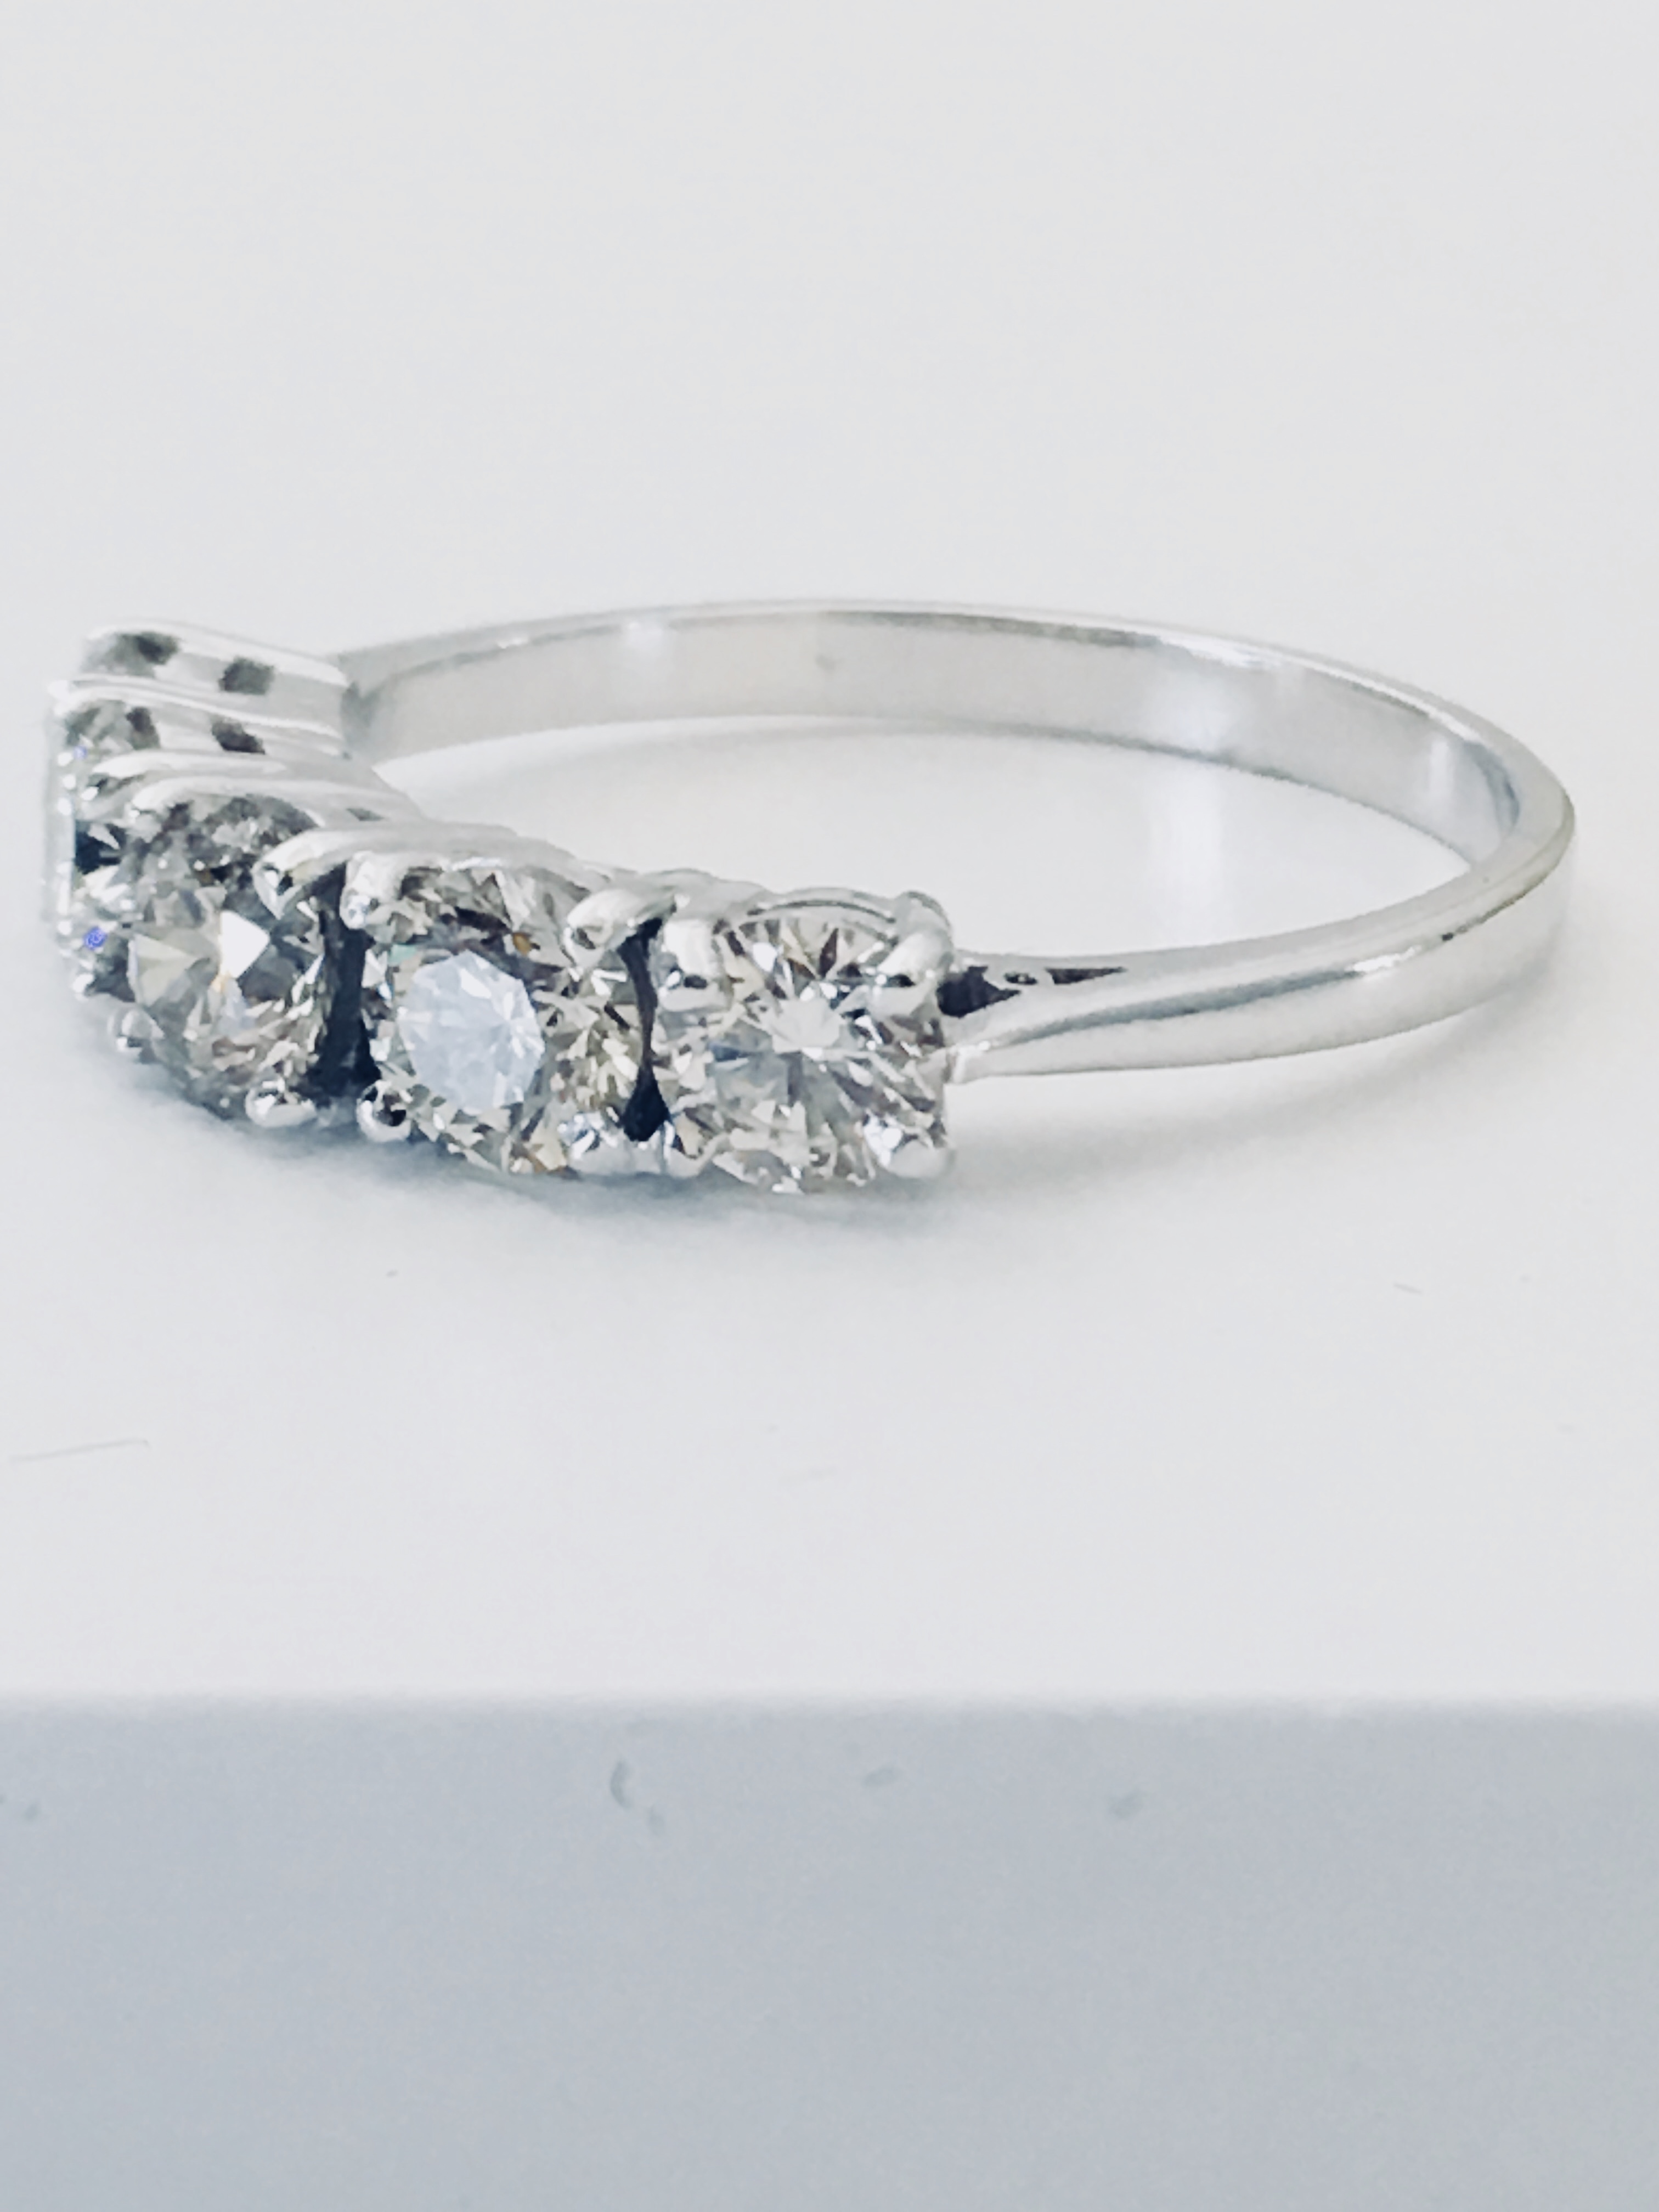 2.10ct diamon dfive stone Ring set in Platinum - Image 2 of 7